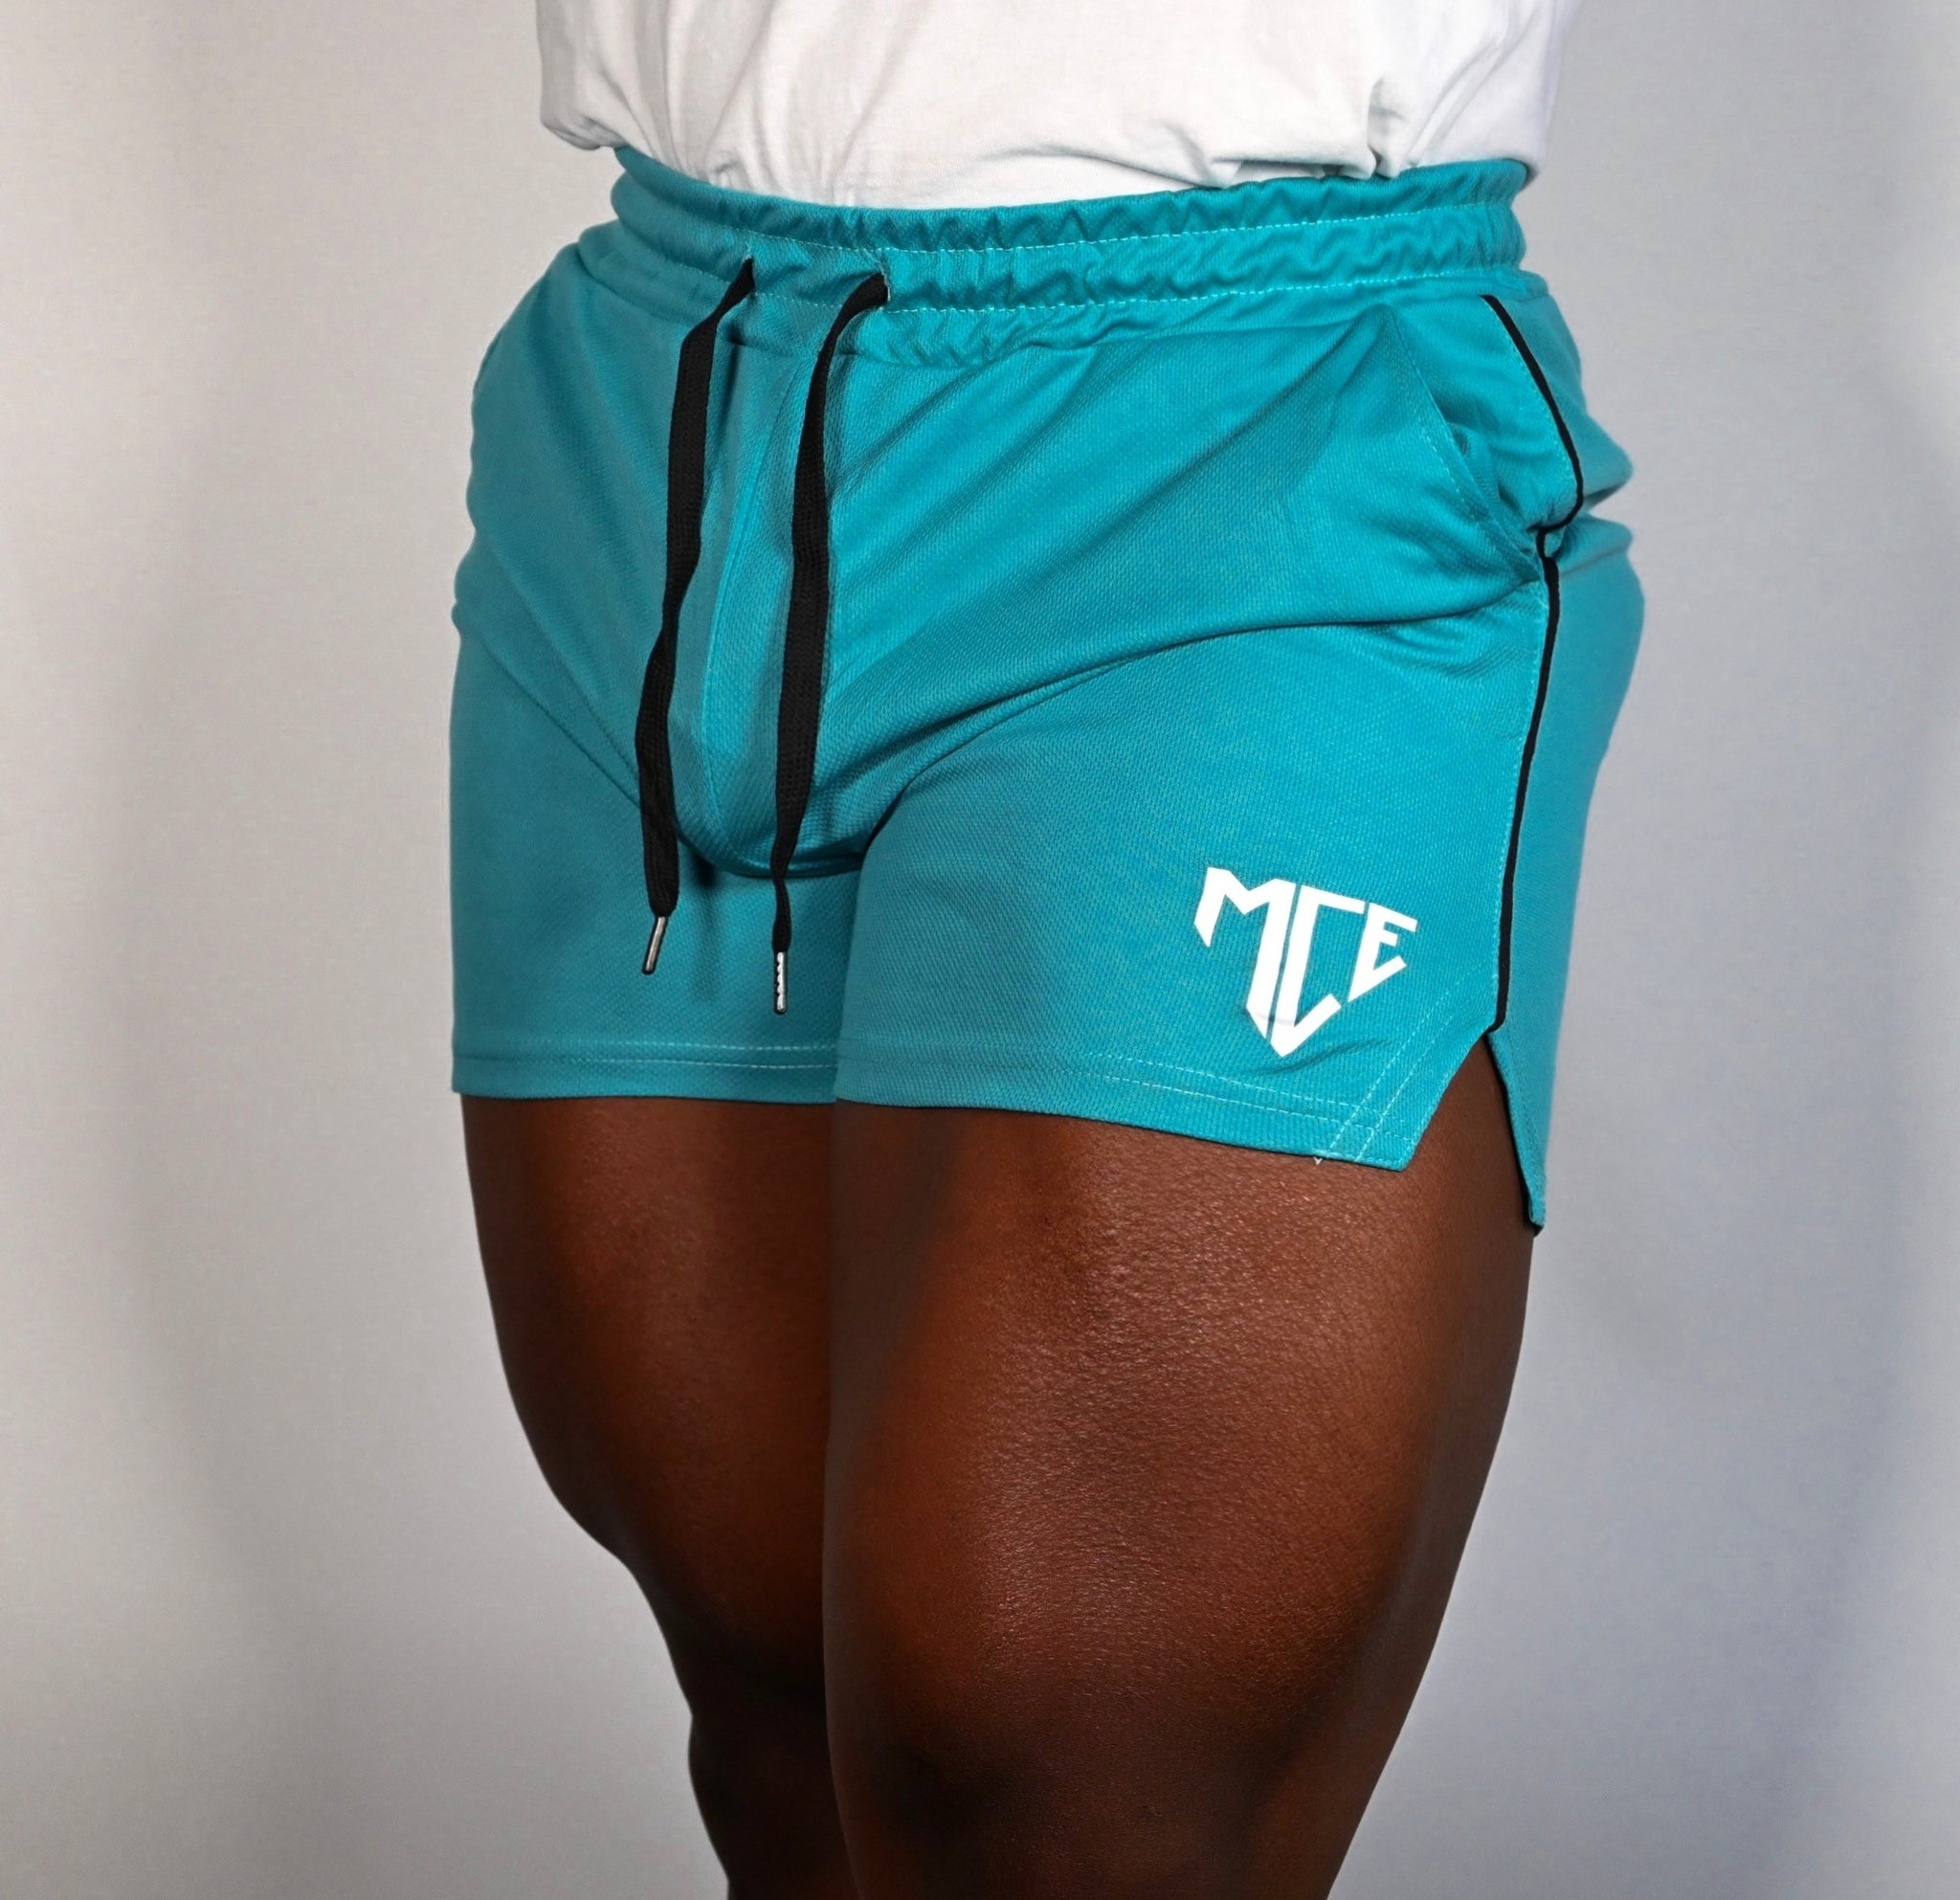 Teal MCE shorts